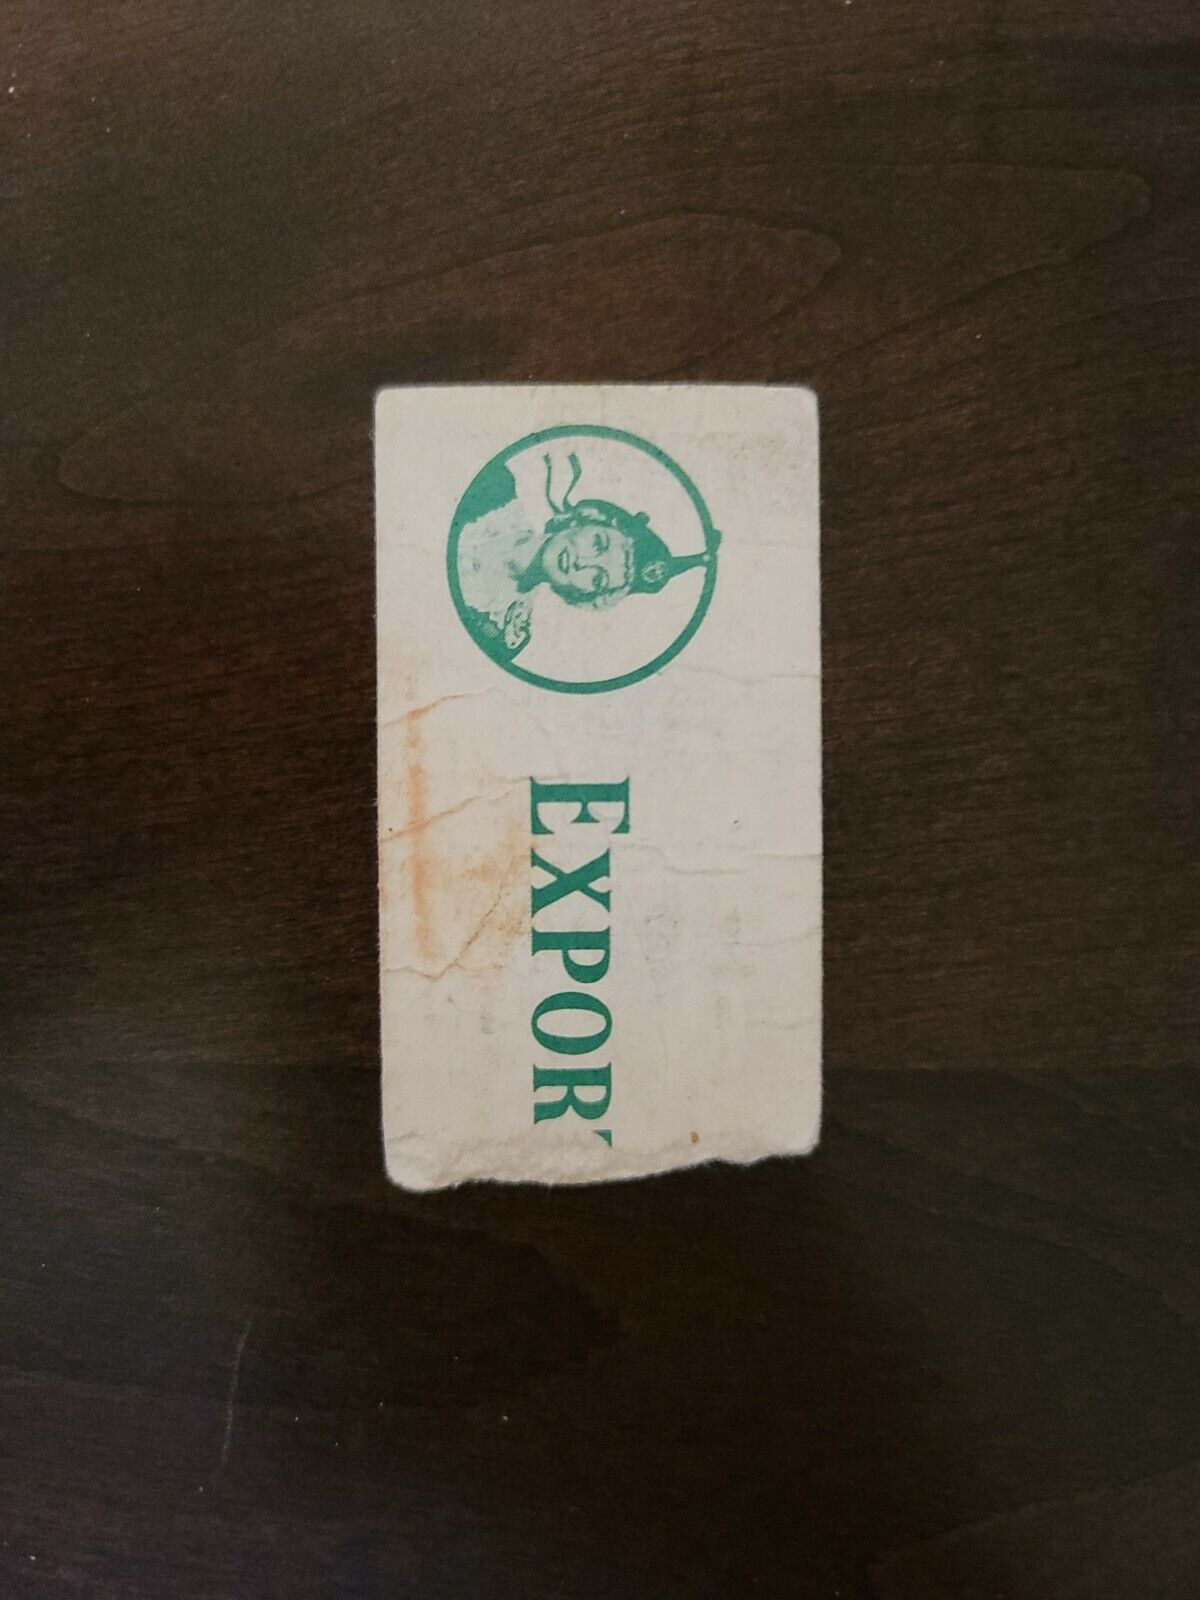 Emerson Lake Palmer 1973 Toronto Maple Leaf Gardens Vintage Concert Ticket Stub